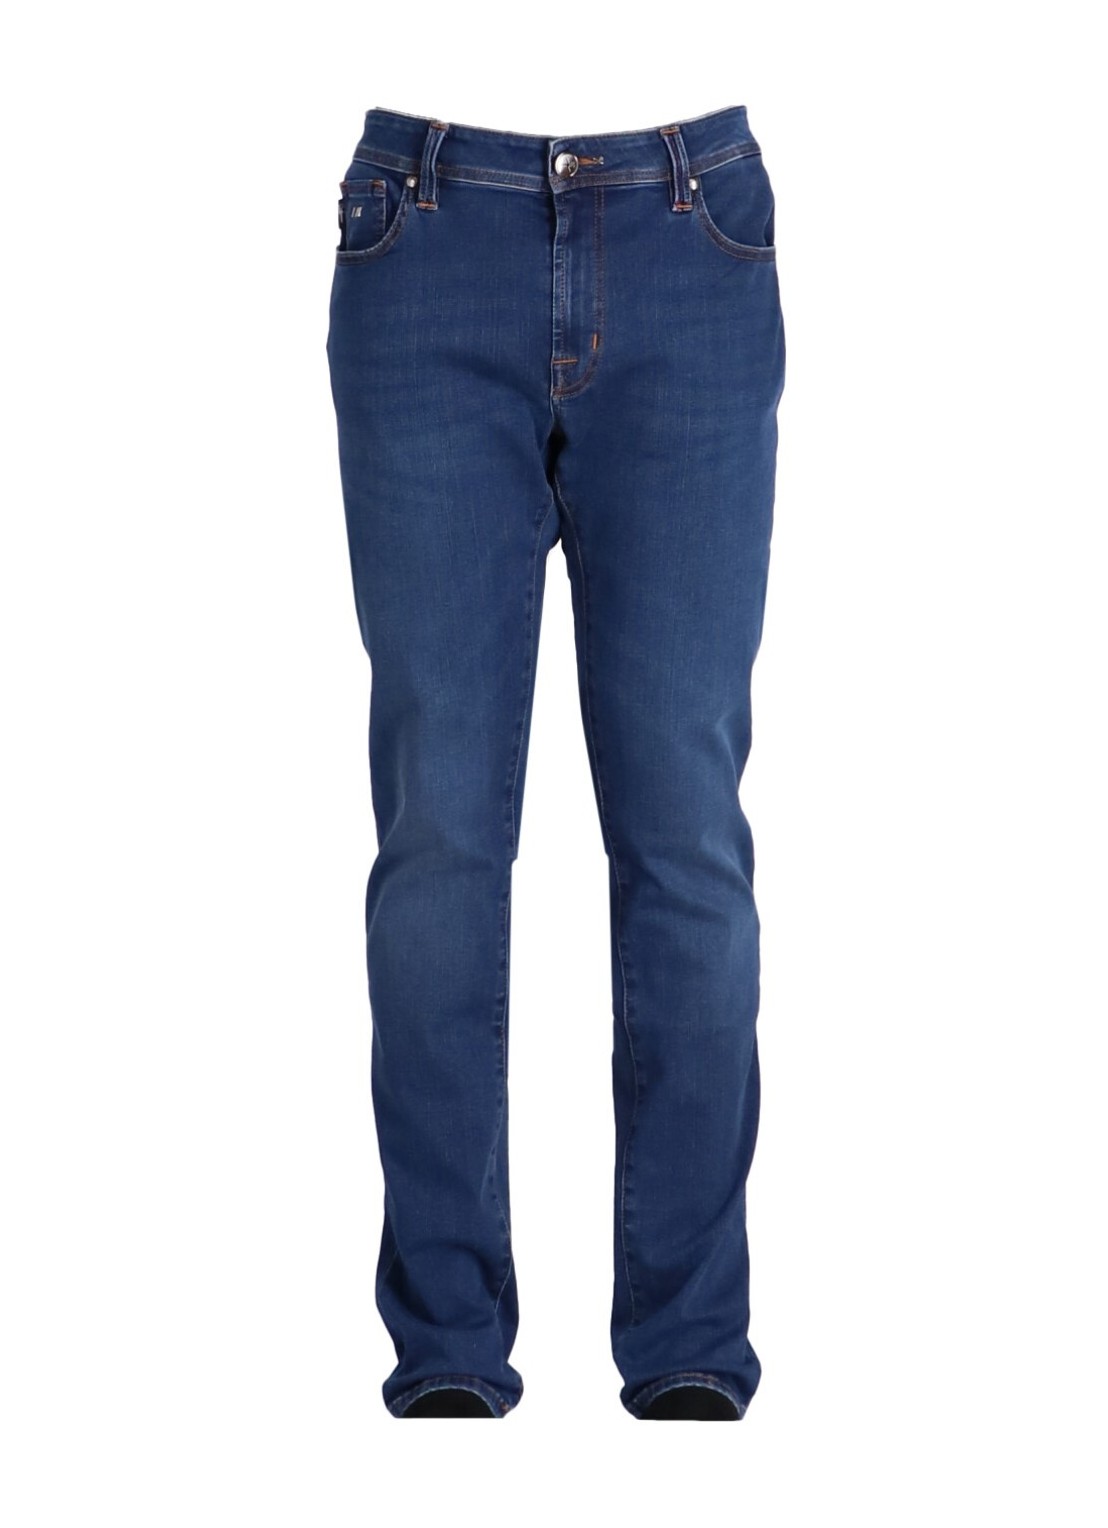 Pantalon jeans tramarossa denim man leonardo zip stre leonardo zip stre 6 months talla 35
 